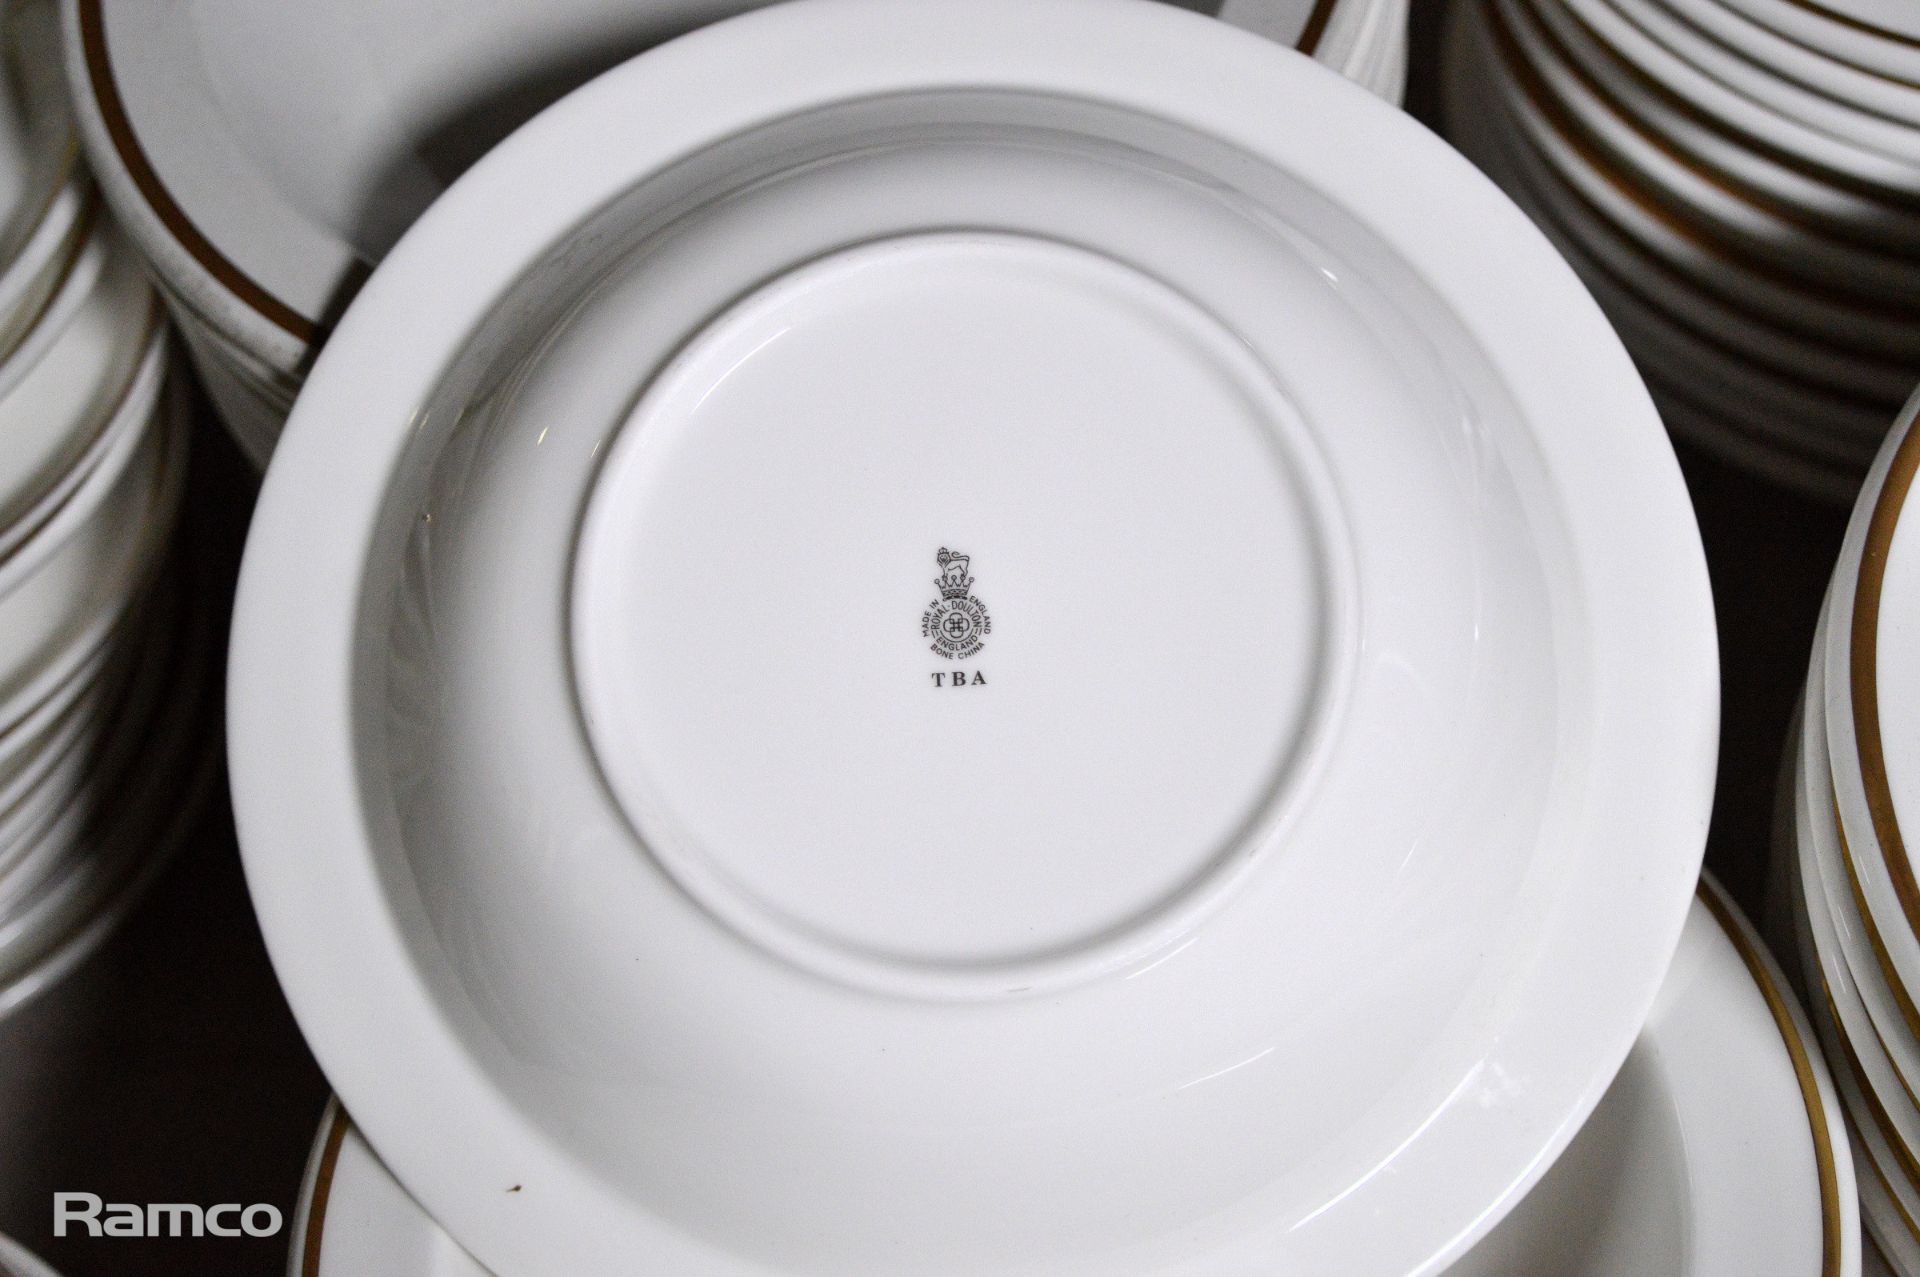 Crockery - plates, bowls, saucers - Image 3 of 4